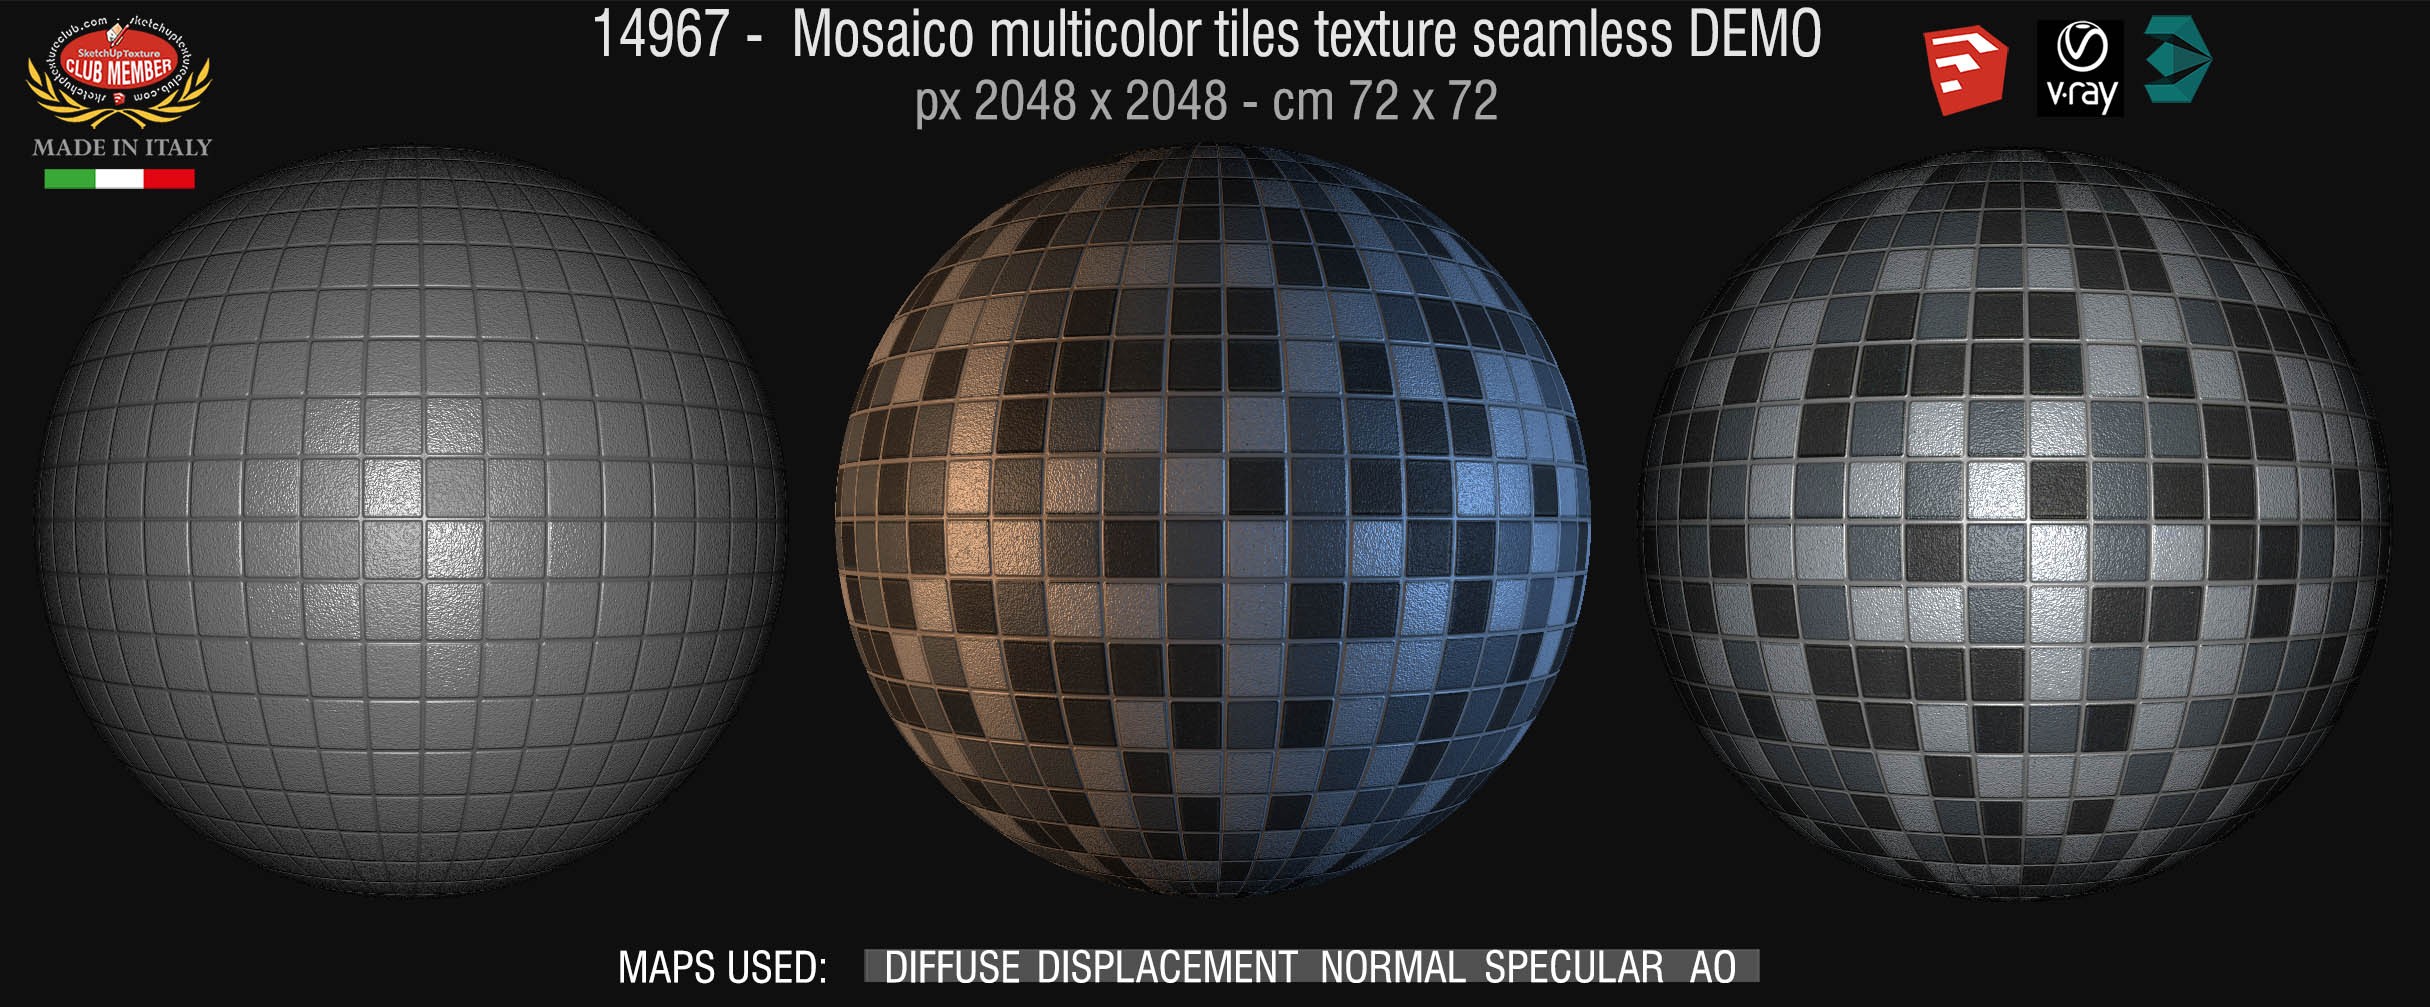 14967 Mosaico multicolor tiles texture seamless + maps DEMO